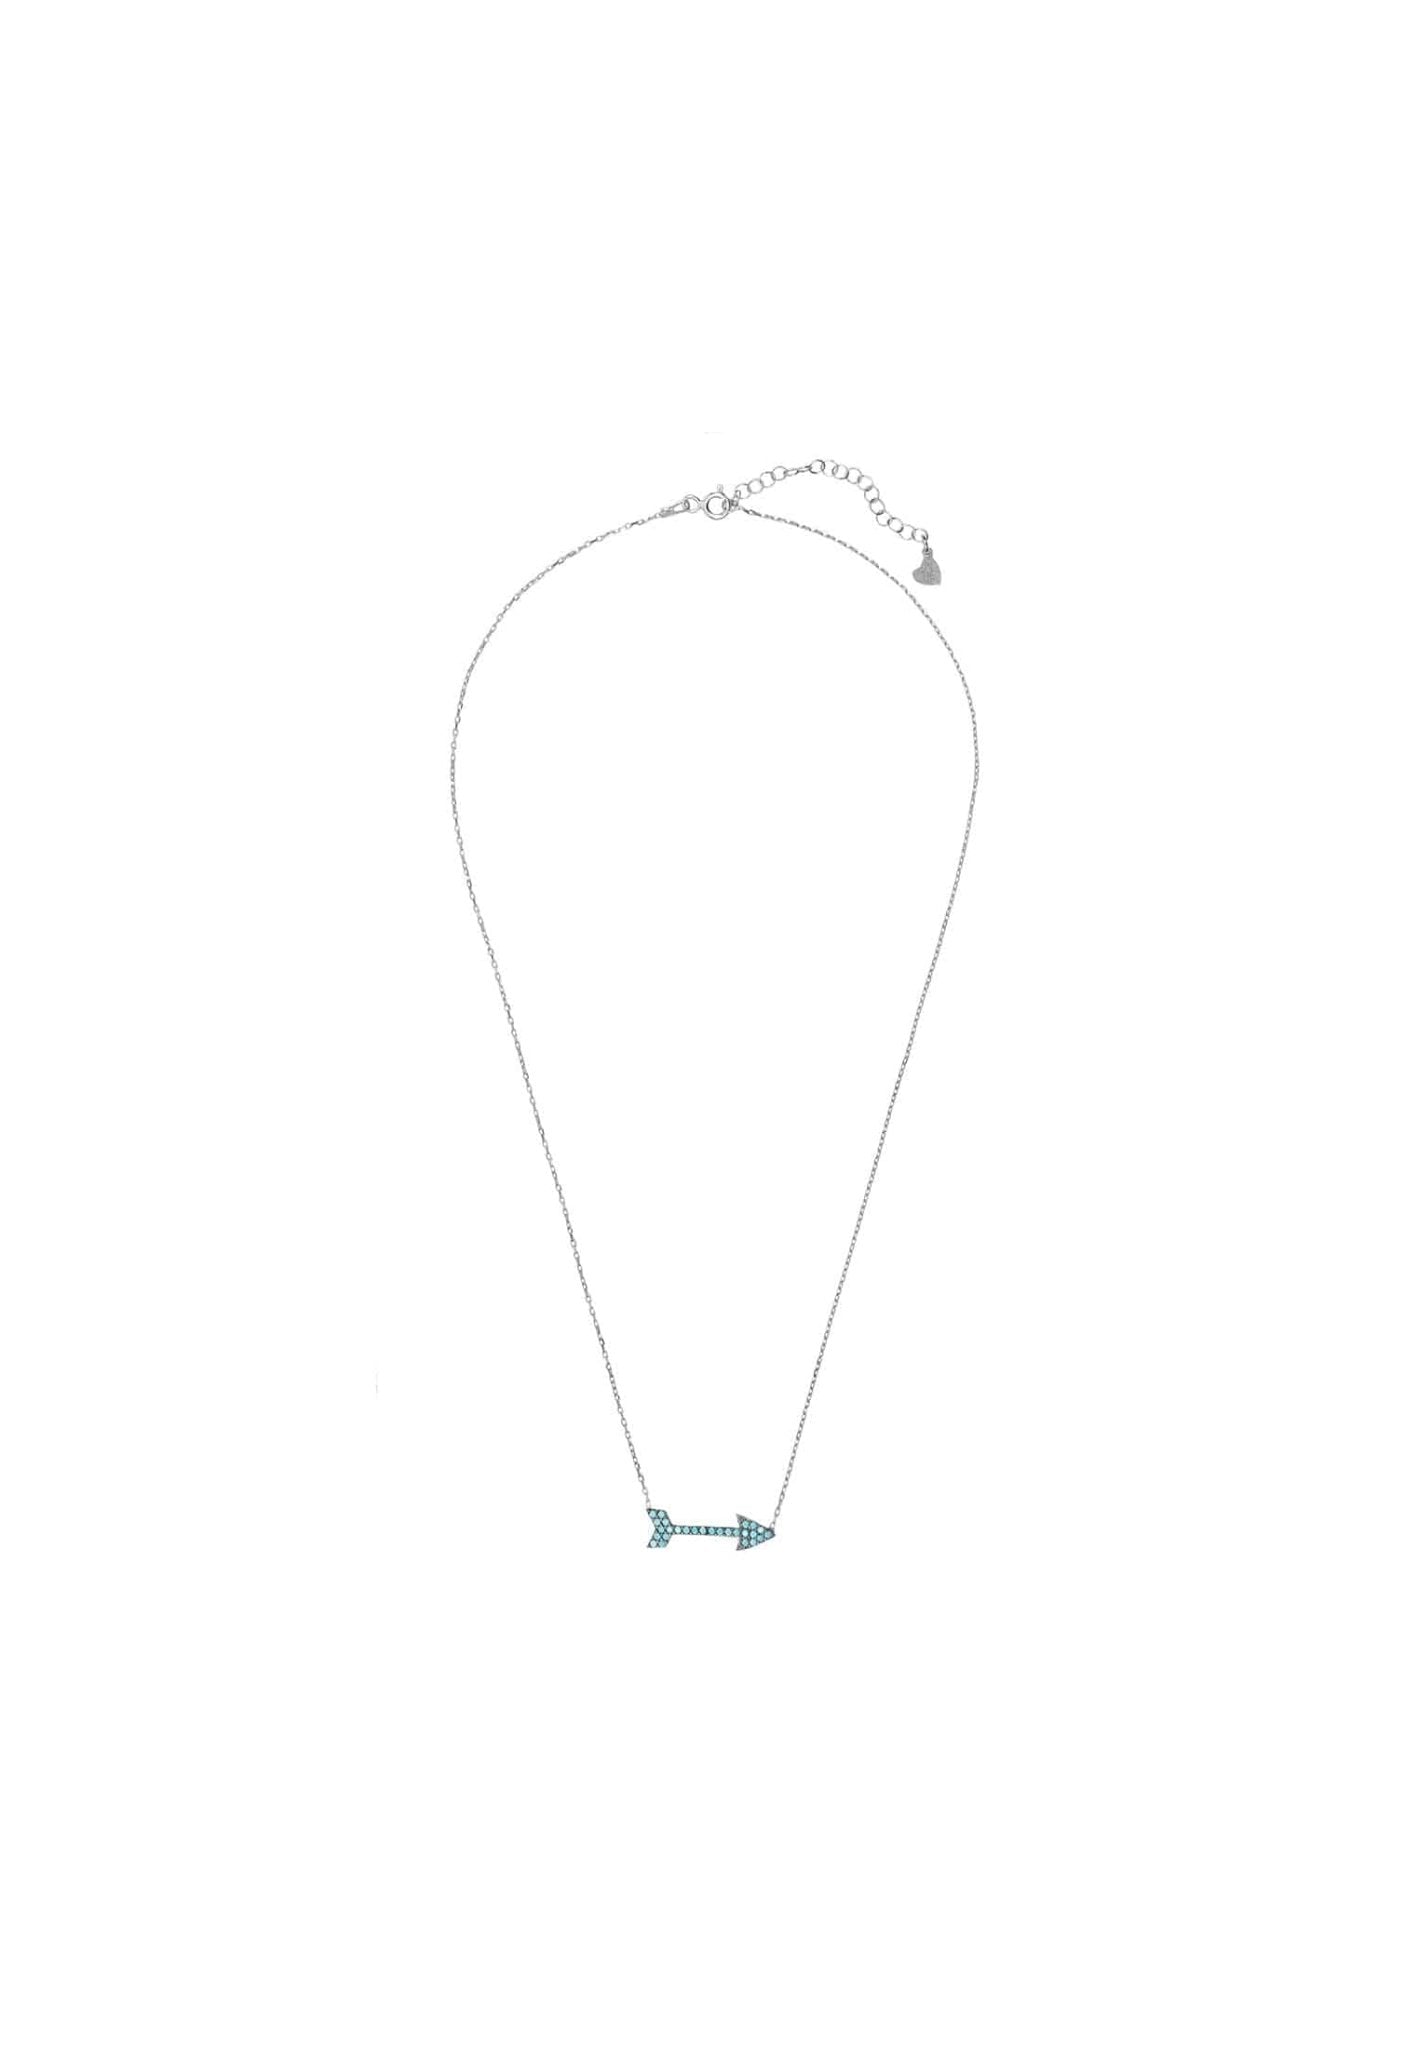 Arrow Necklace Blue Turquoise Gemstone Silver - LATELITA Necklaces